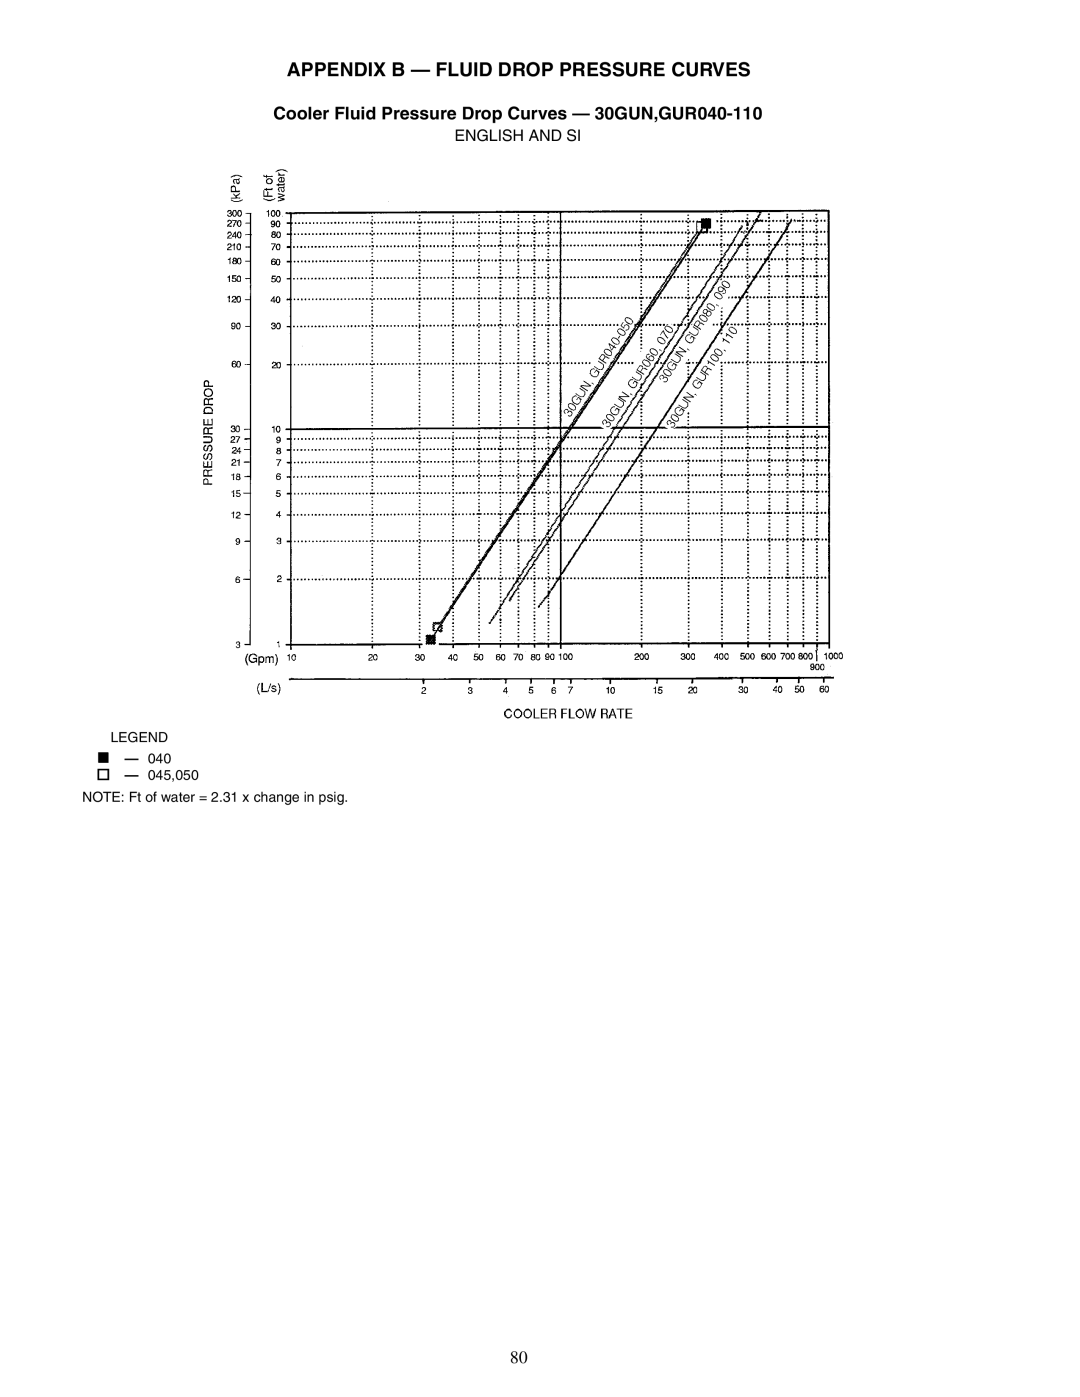 Carrier Air Conditioner Appendix B - Fluid Drop Pressure Curves, Cooler Fluid Pressure Drop Curves - 30GUN,GUR040-110 